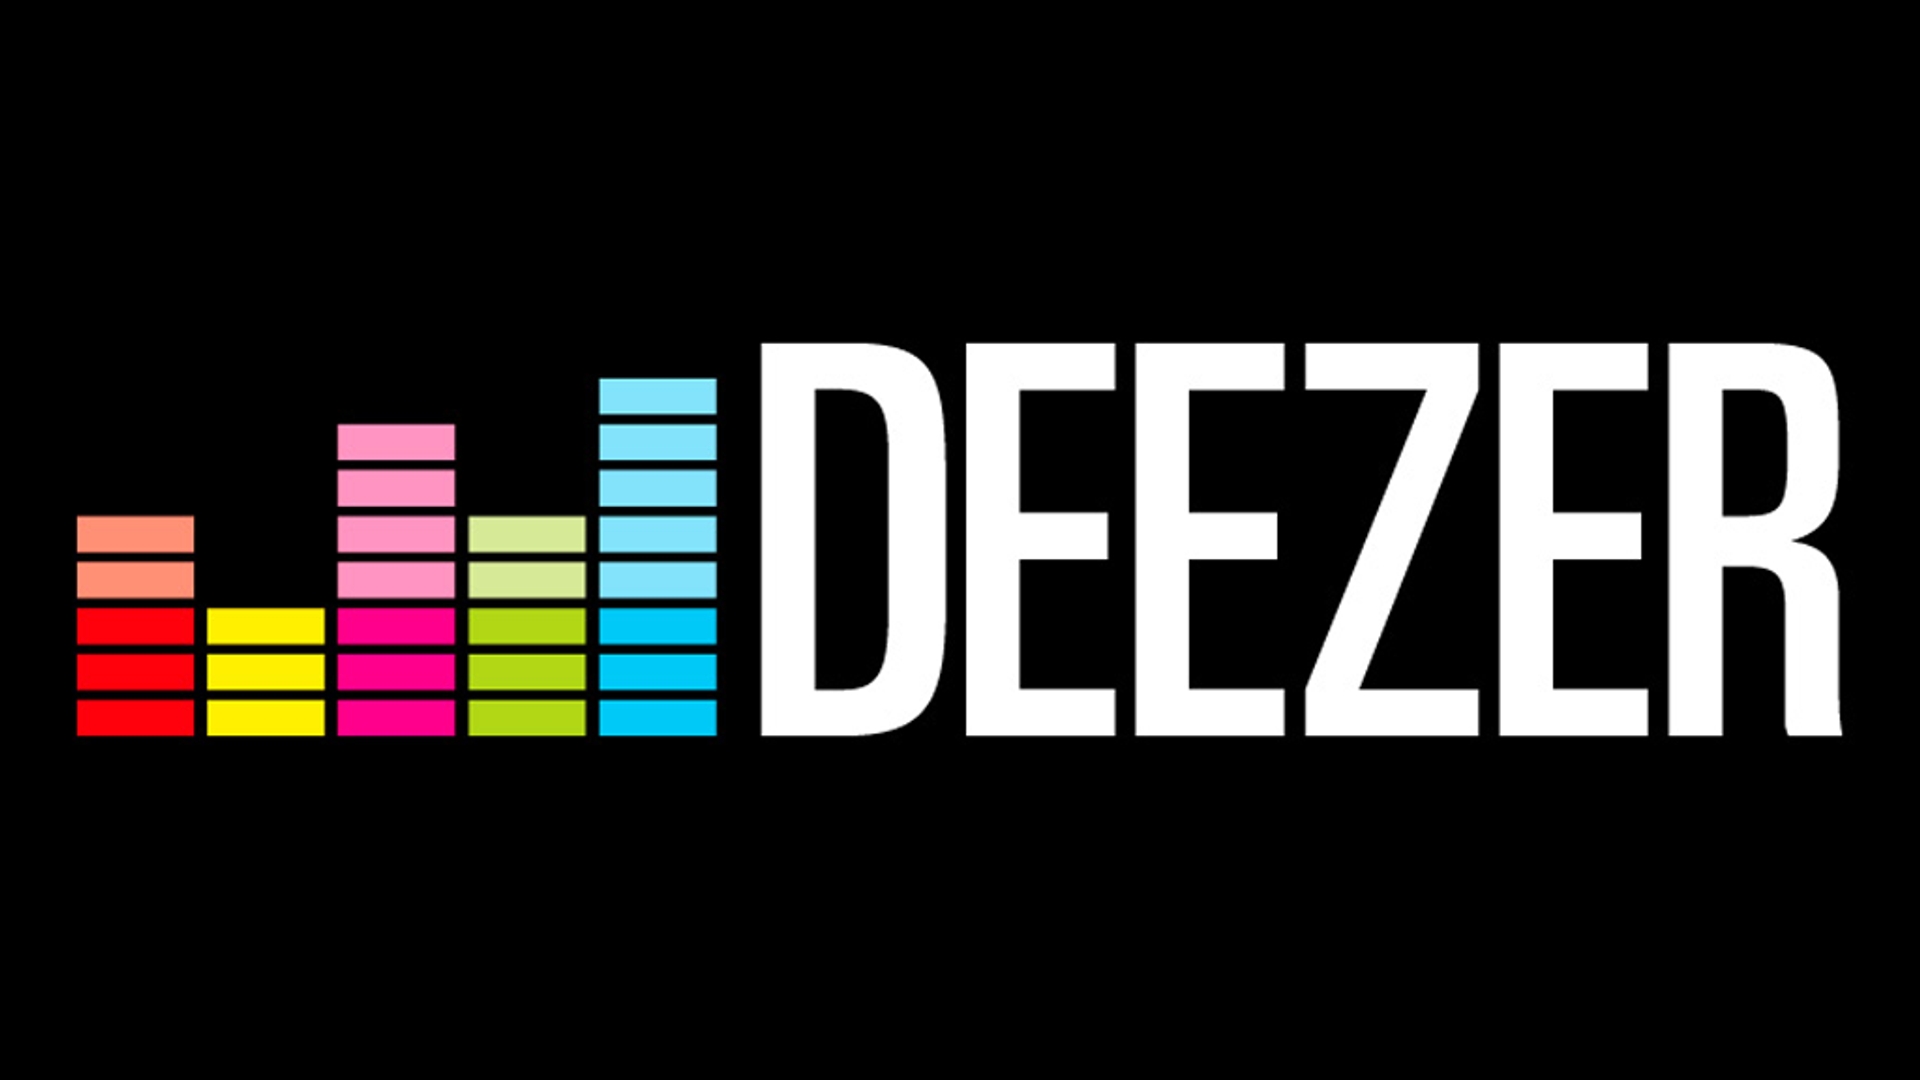 Deezer logo 16x9